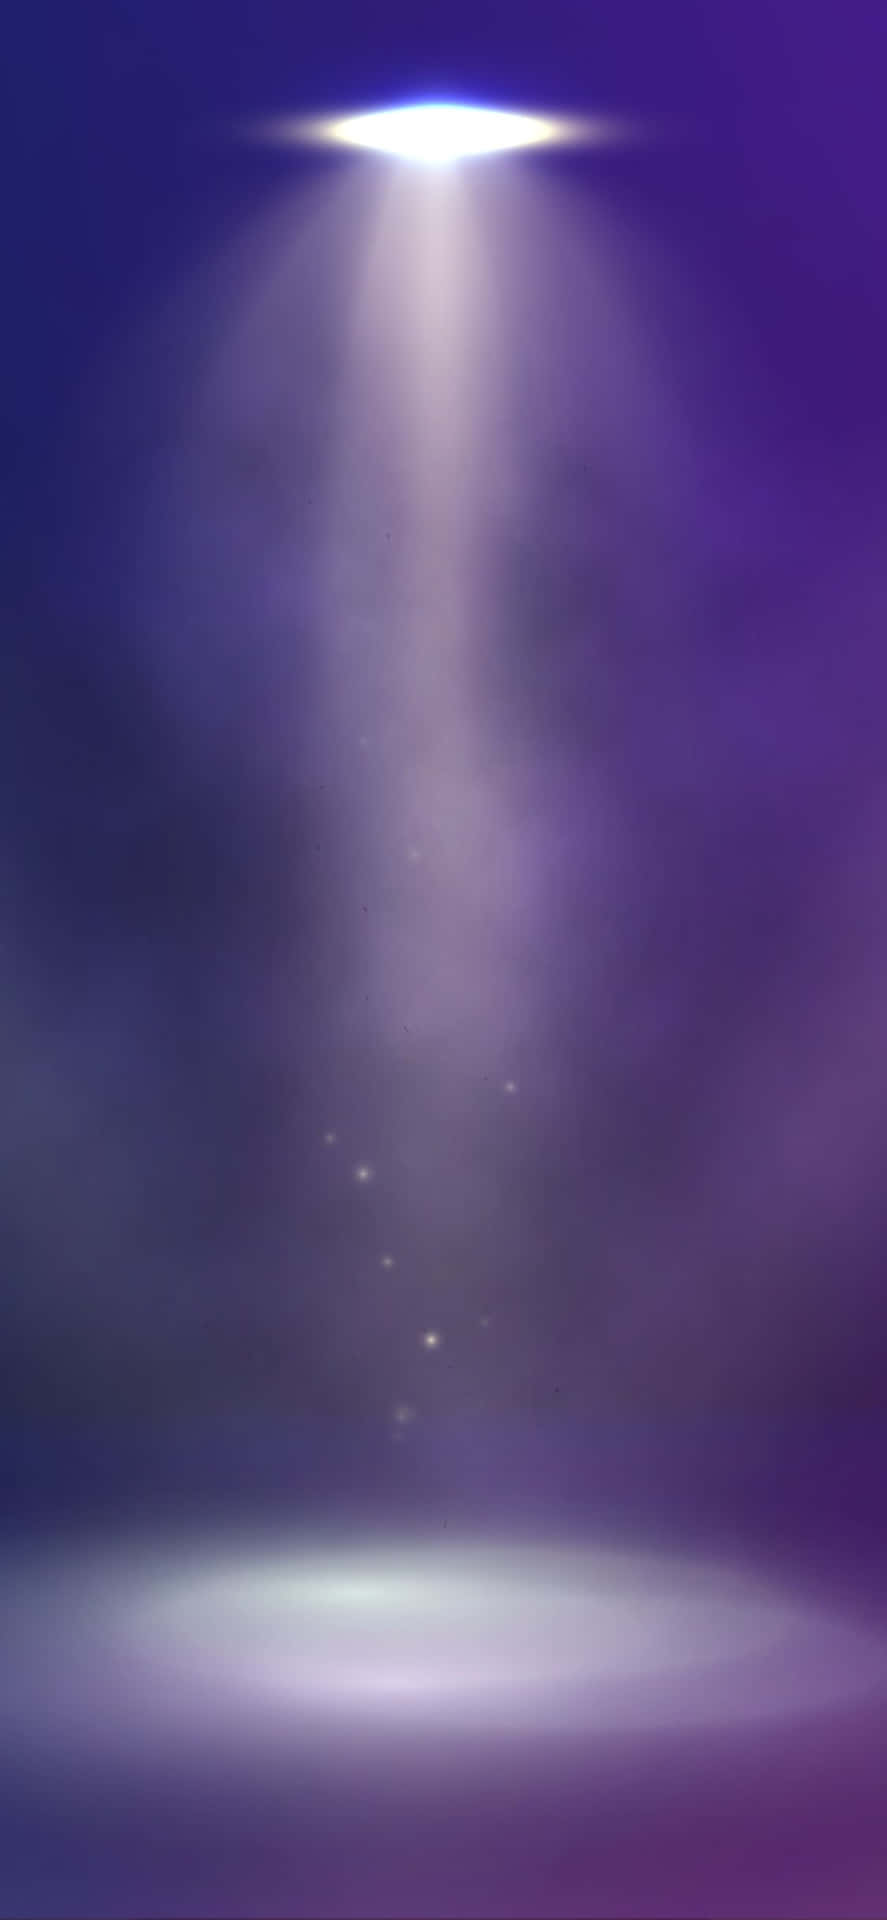 A Light Beam On A Purple Background Wallpaper